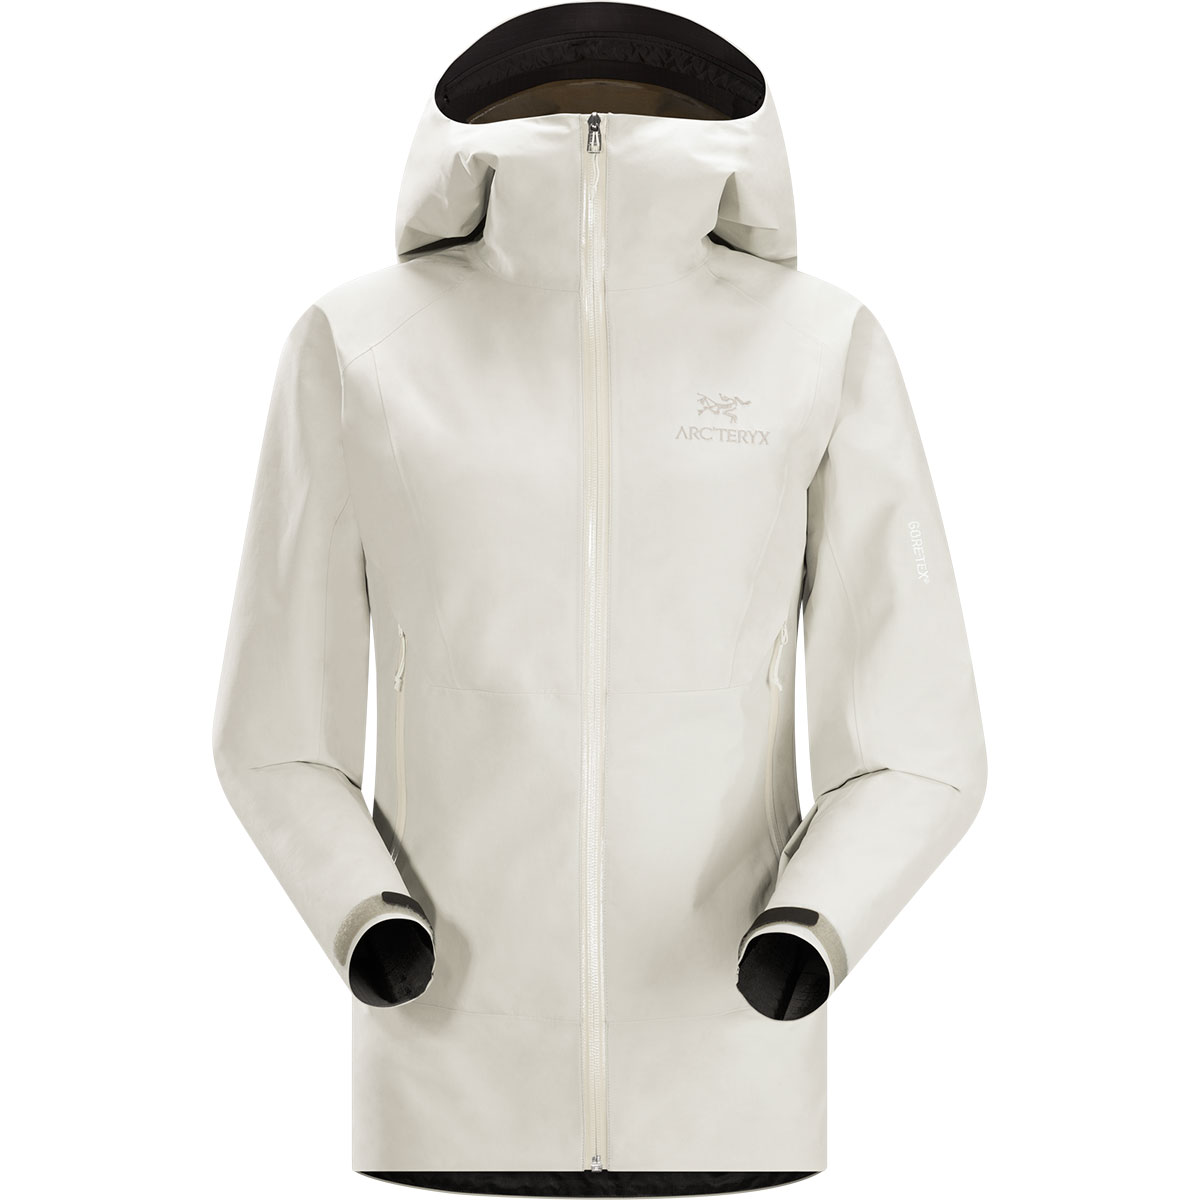 Beta SL Jacket, women's, discontinued Fall 2016 colors